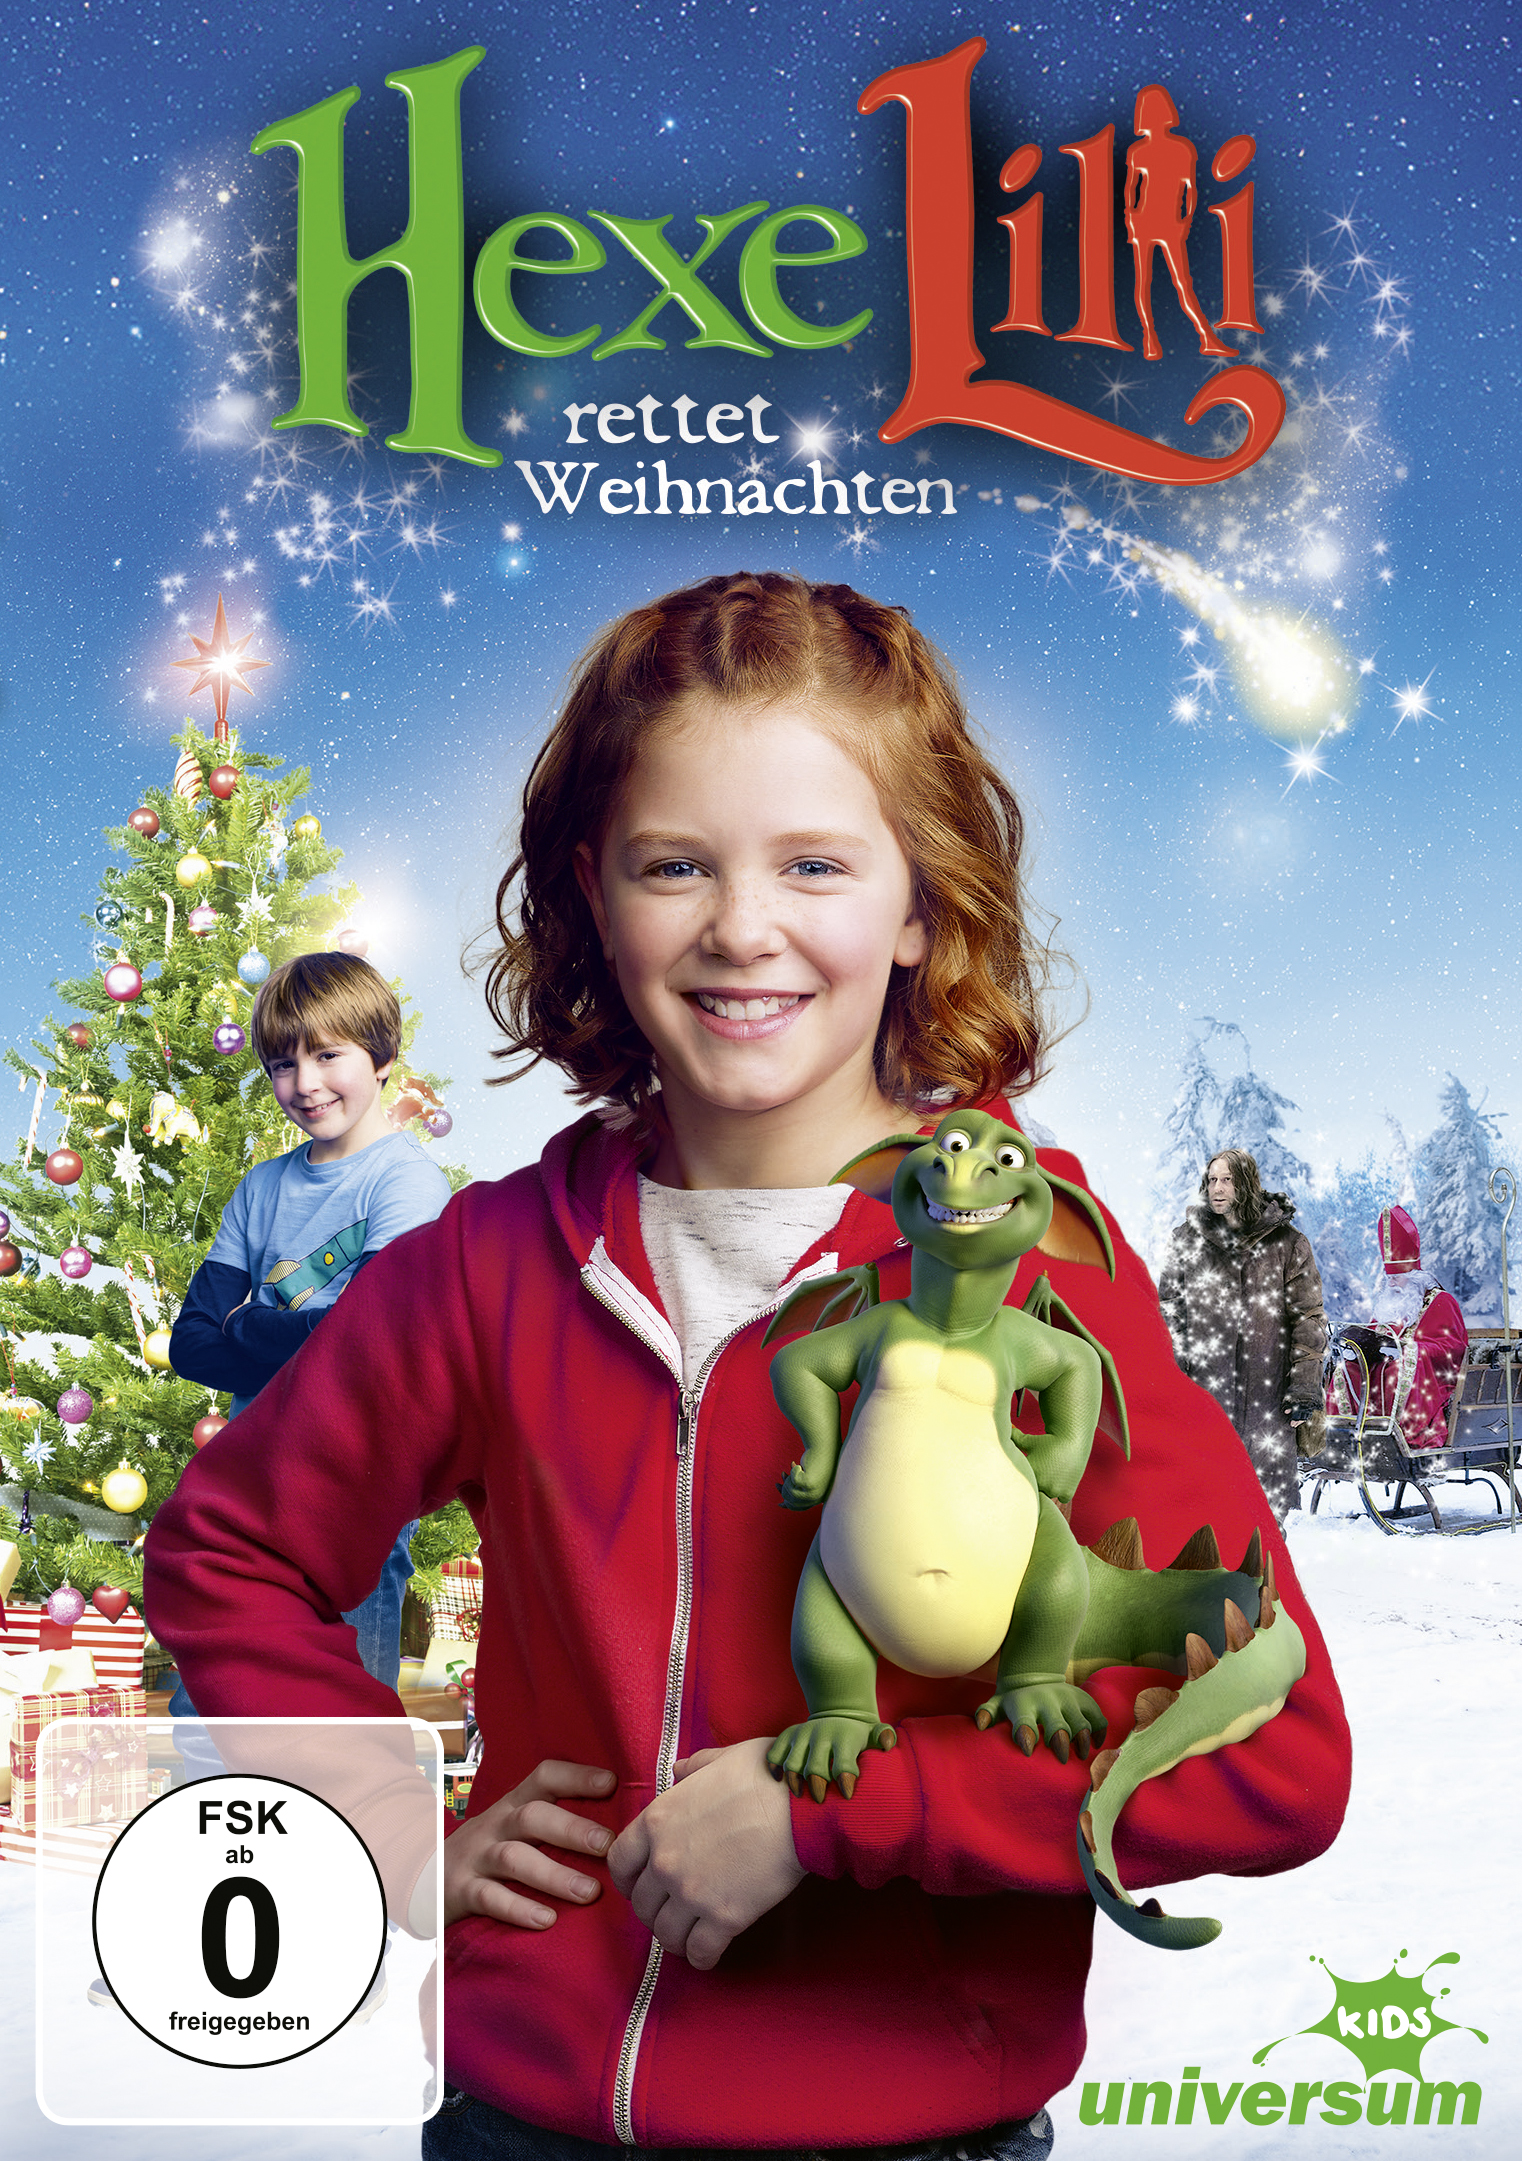 DVD rettet Lilli Weihnachten Hexe